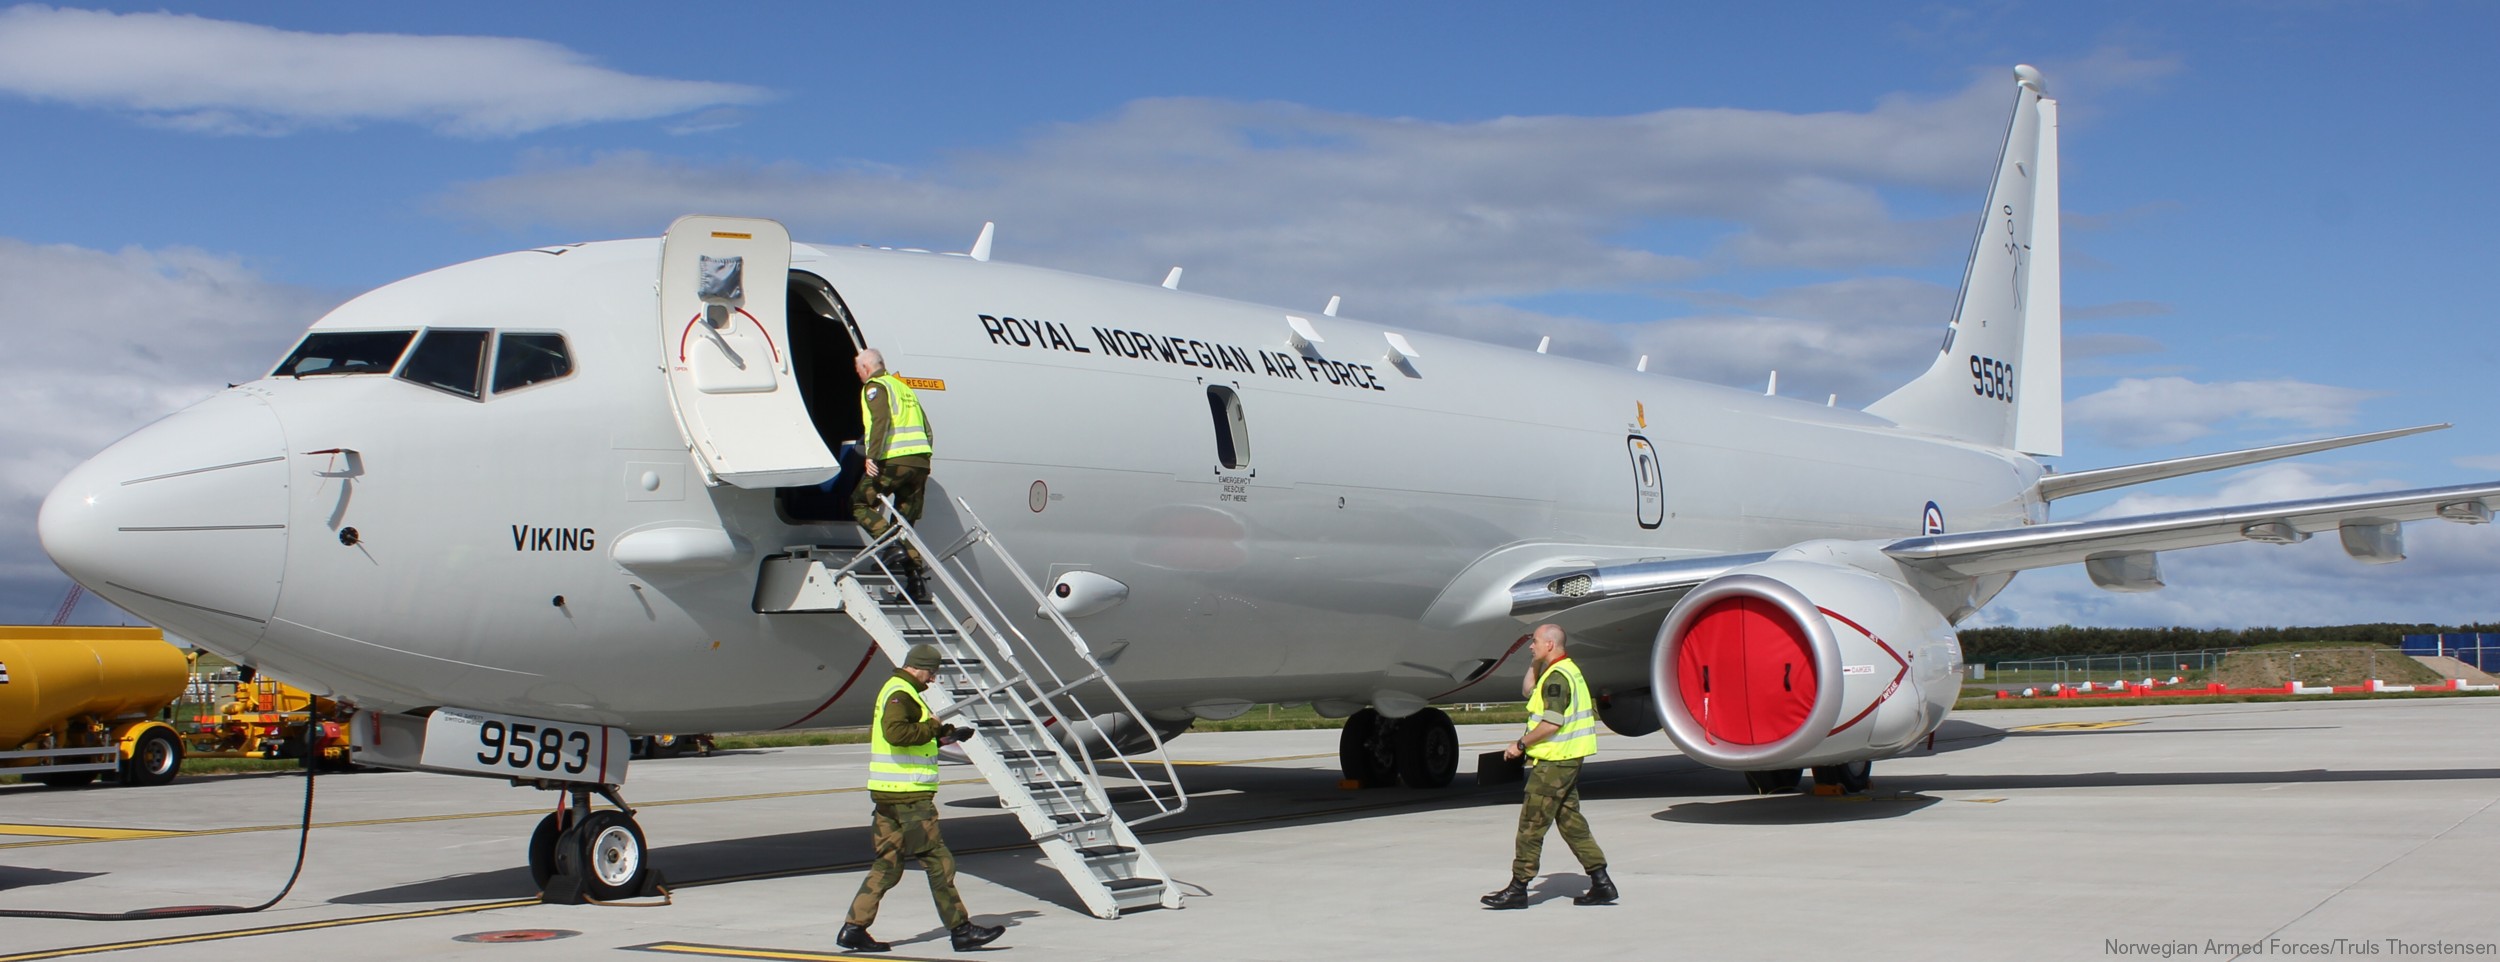 p-8a poseidon maritime patrol aircraft royal norwegian air force luftforsvaret 9583 viking 14